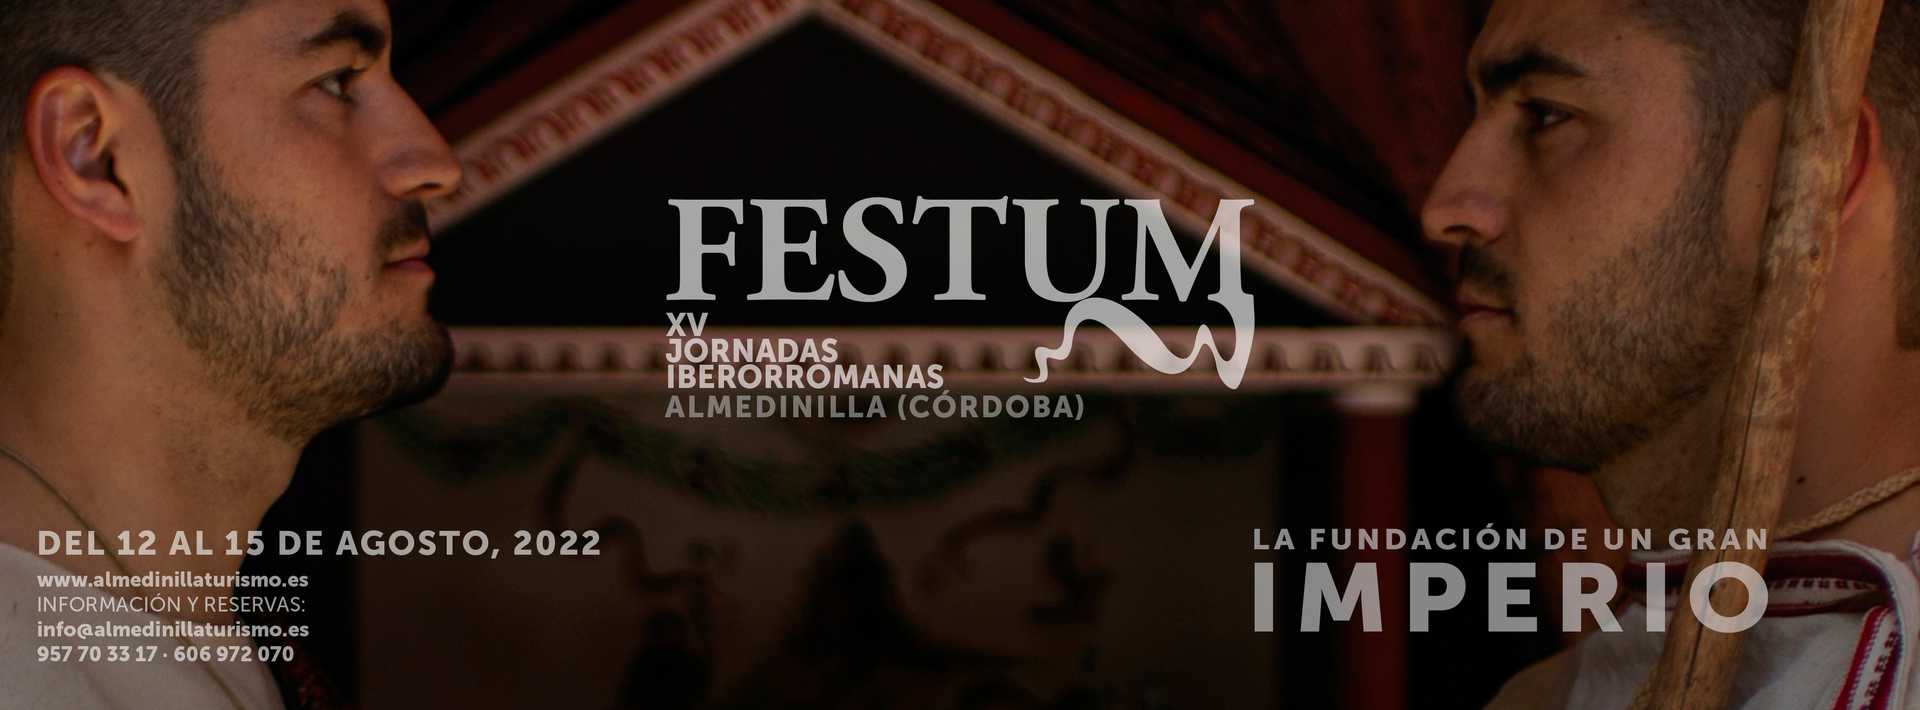 Festum - Jornadas Iberorromanas